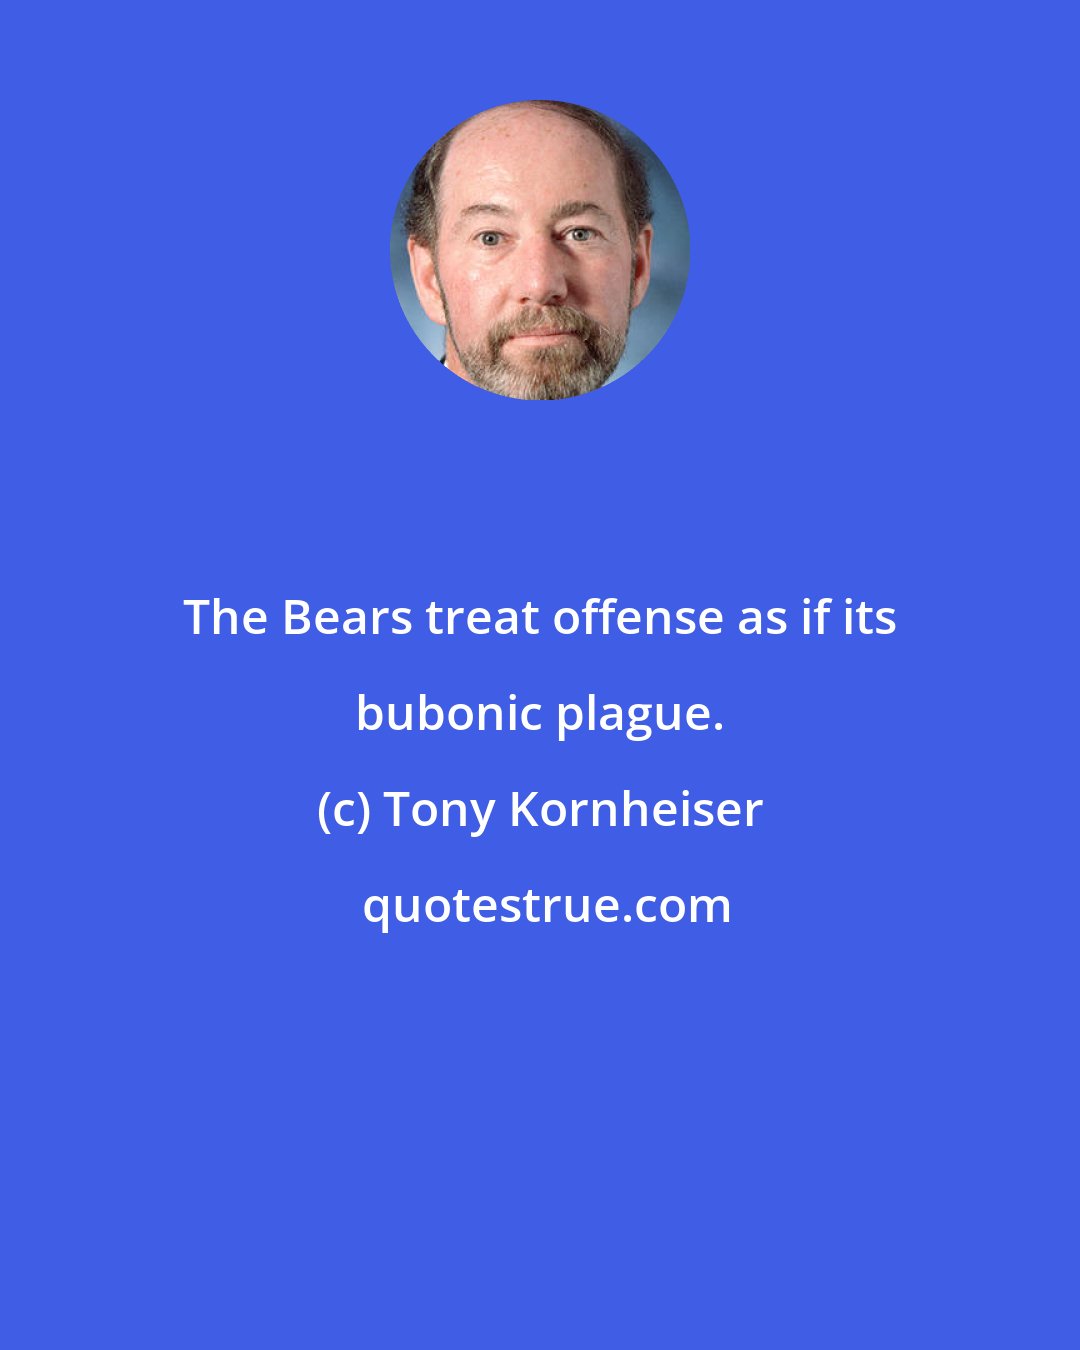 Tony Kornheiser: The Bears treat offense as if its bubonic plague.